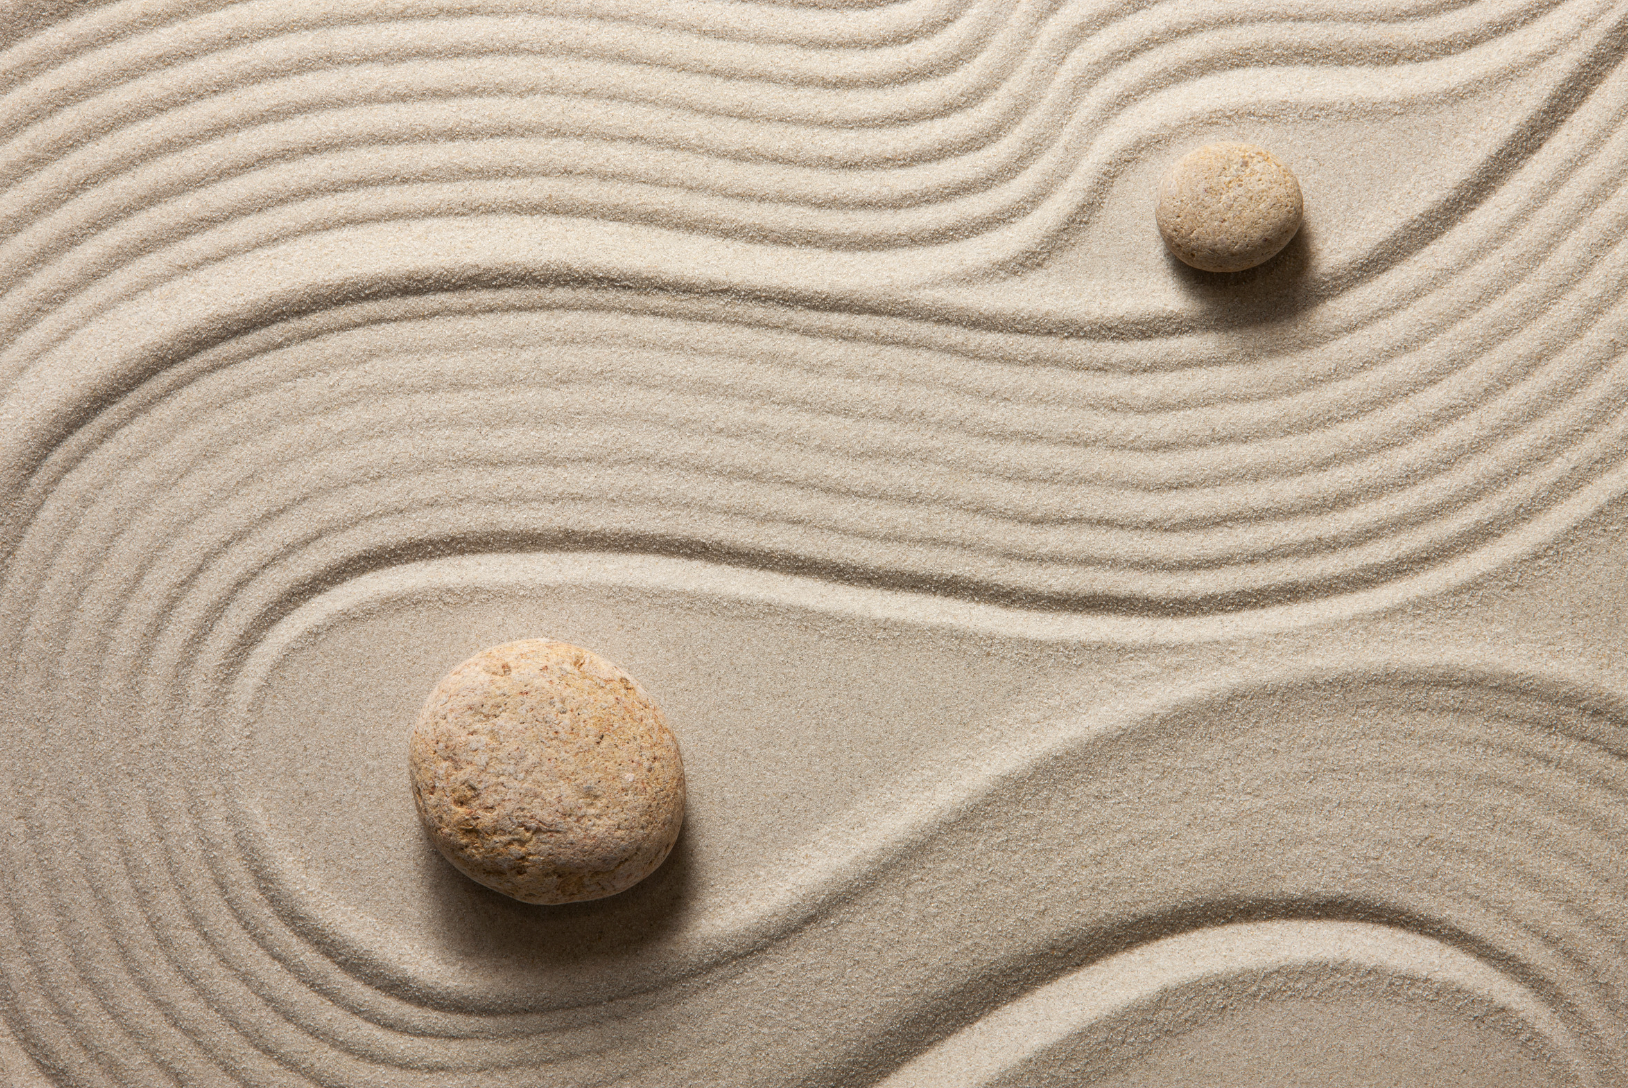 rocks on a raked sand background